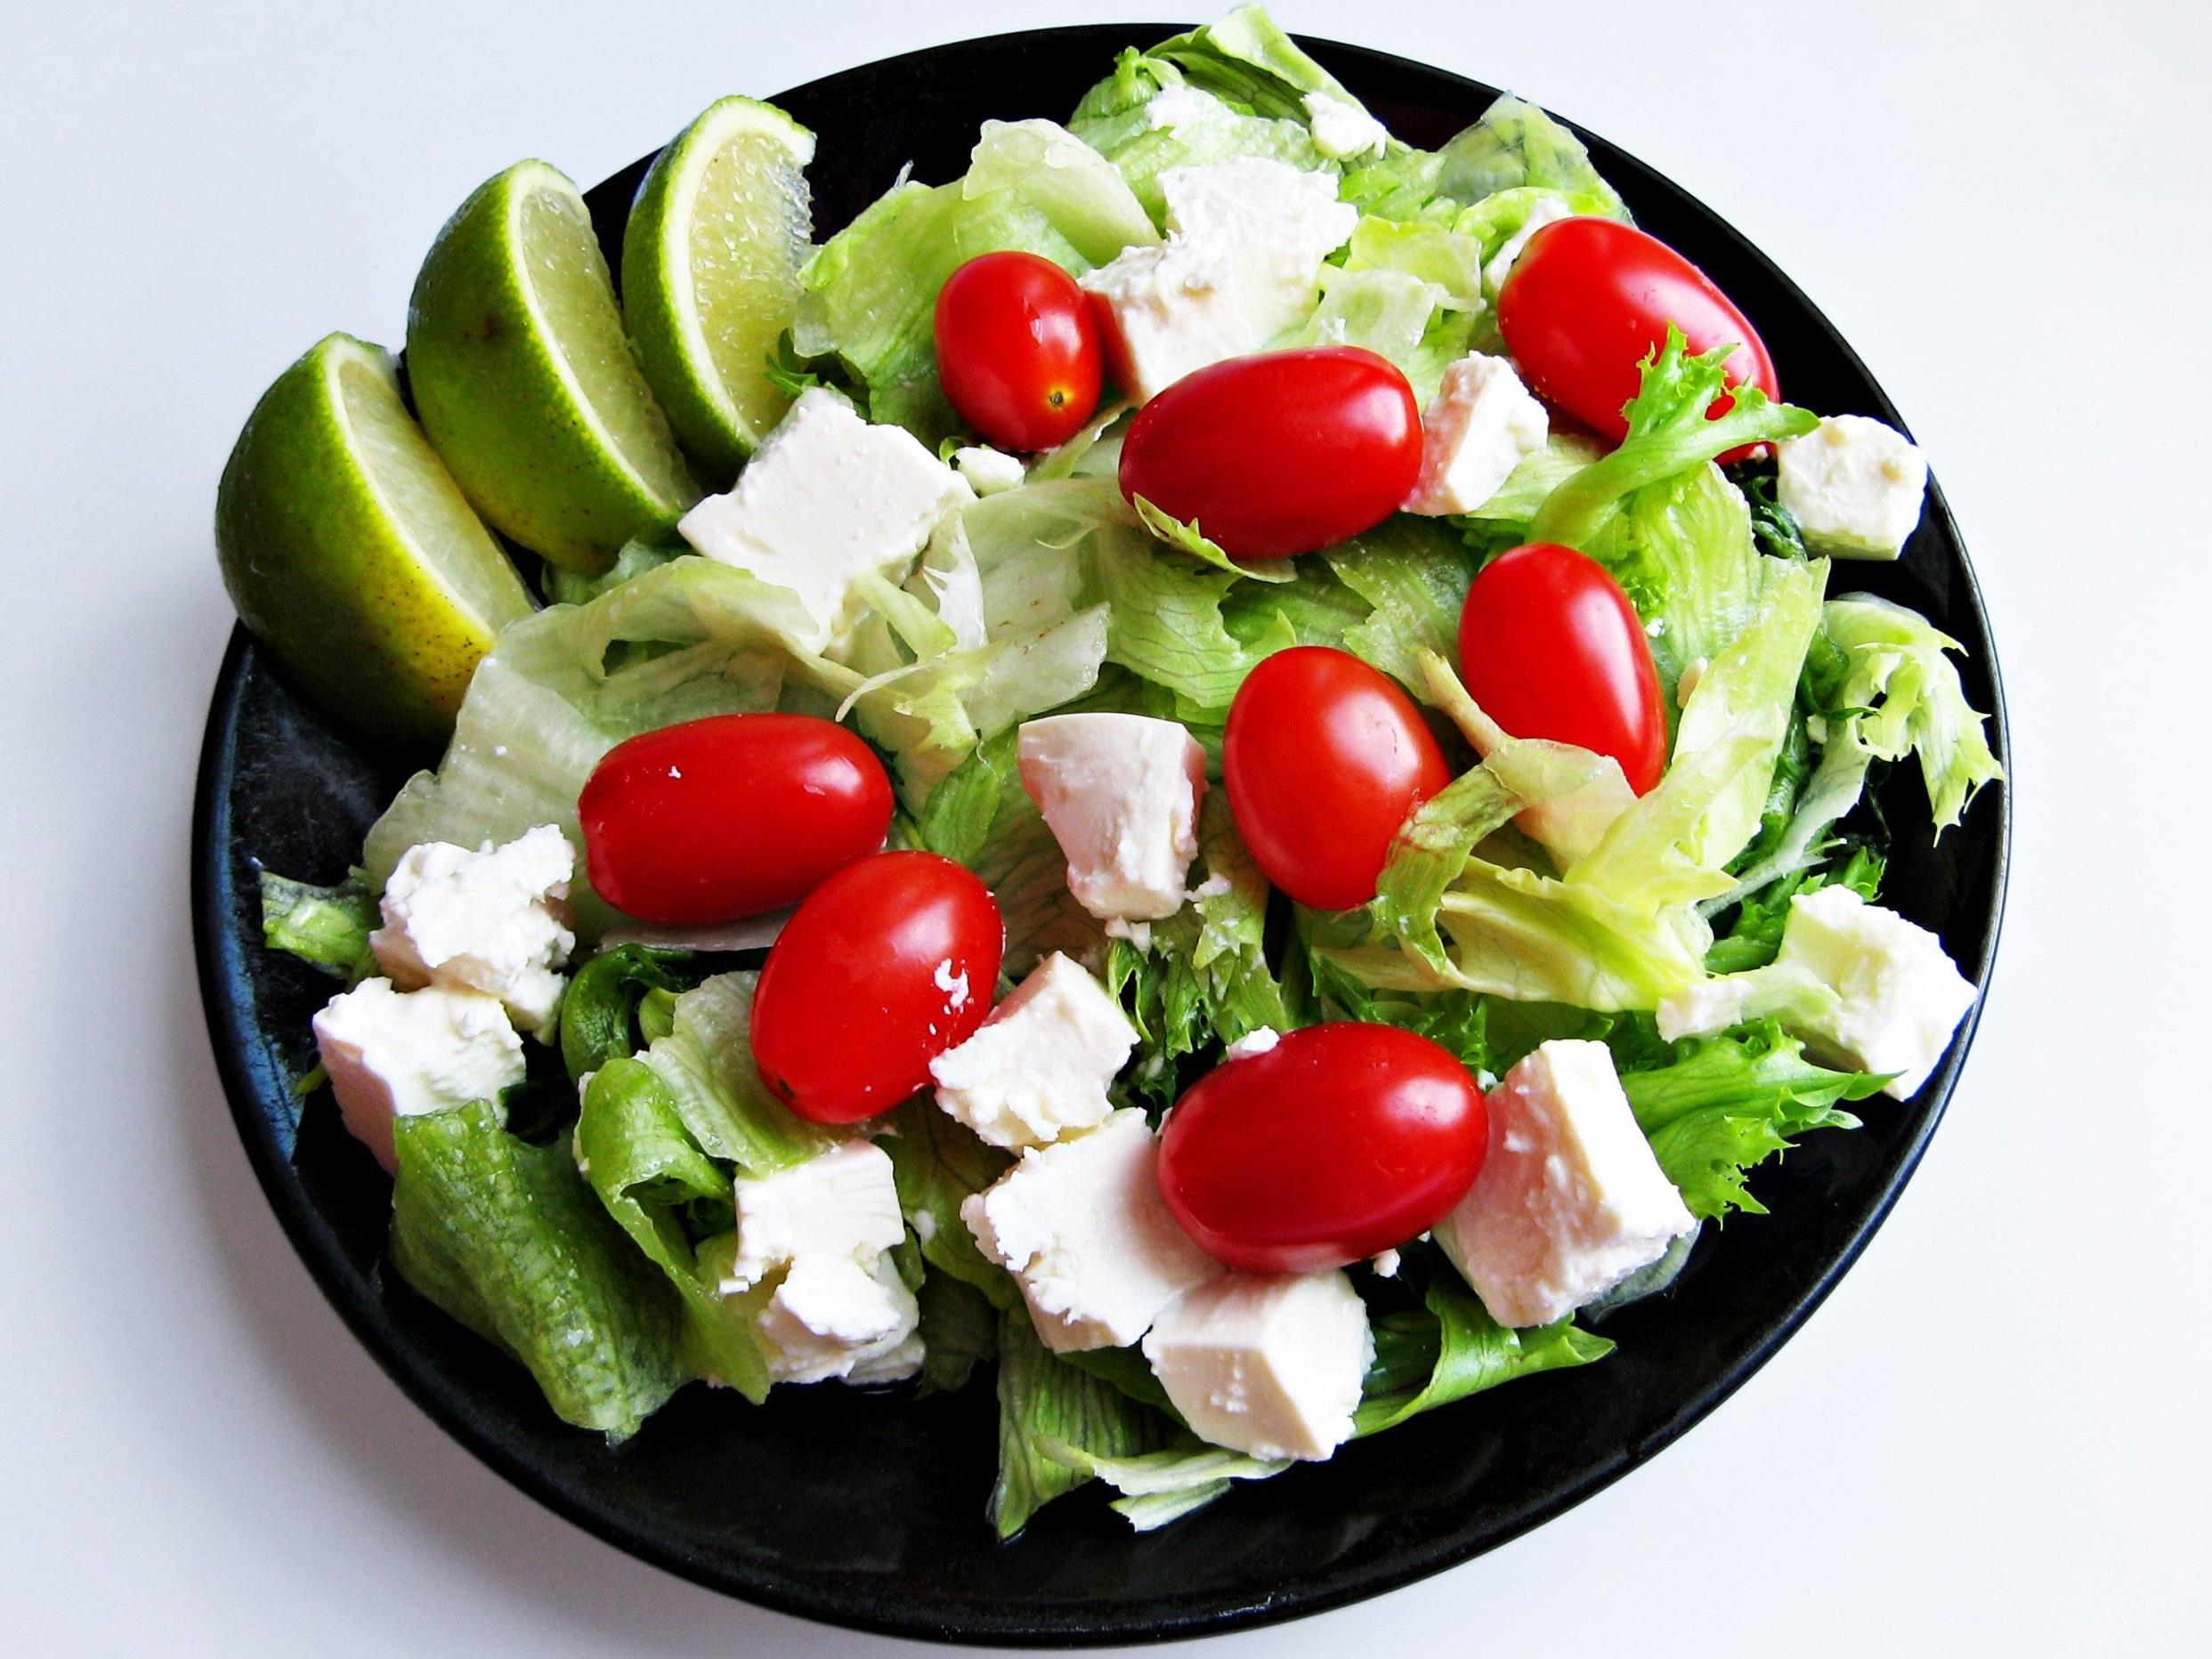 Statt dem Griff zum Fertigprodukt rät die AK zu frischem Salat.